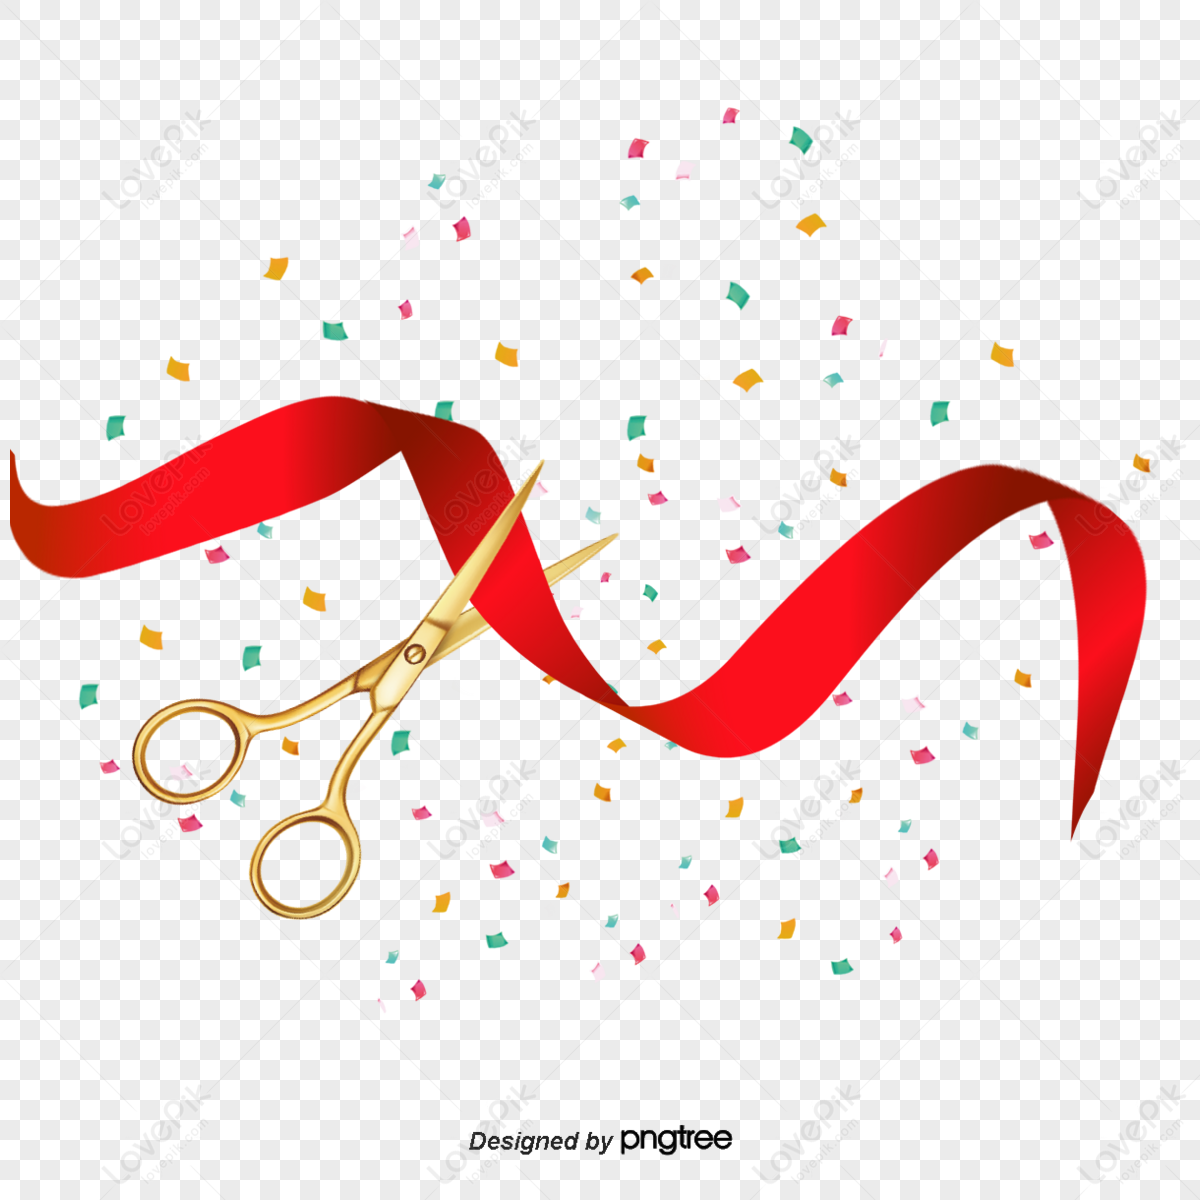 ribbon-cutting activities,cut the ribbon,colored ribbons,colored ribbon png image